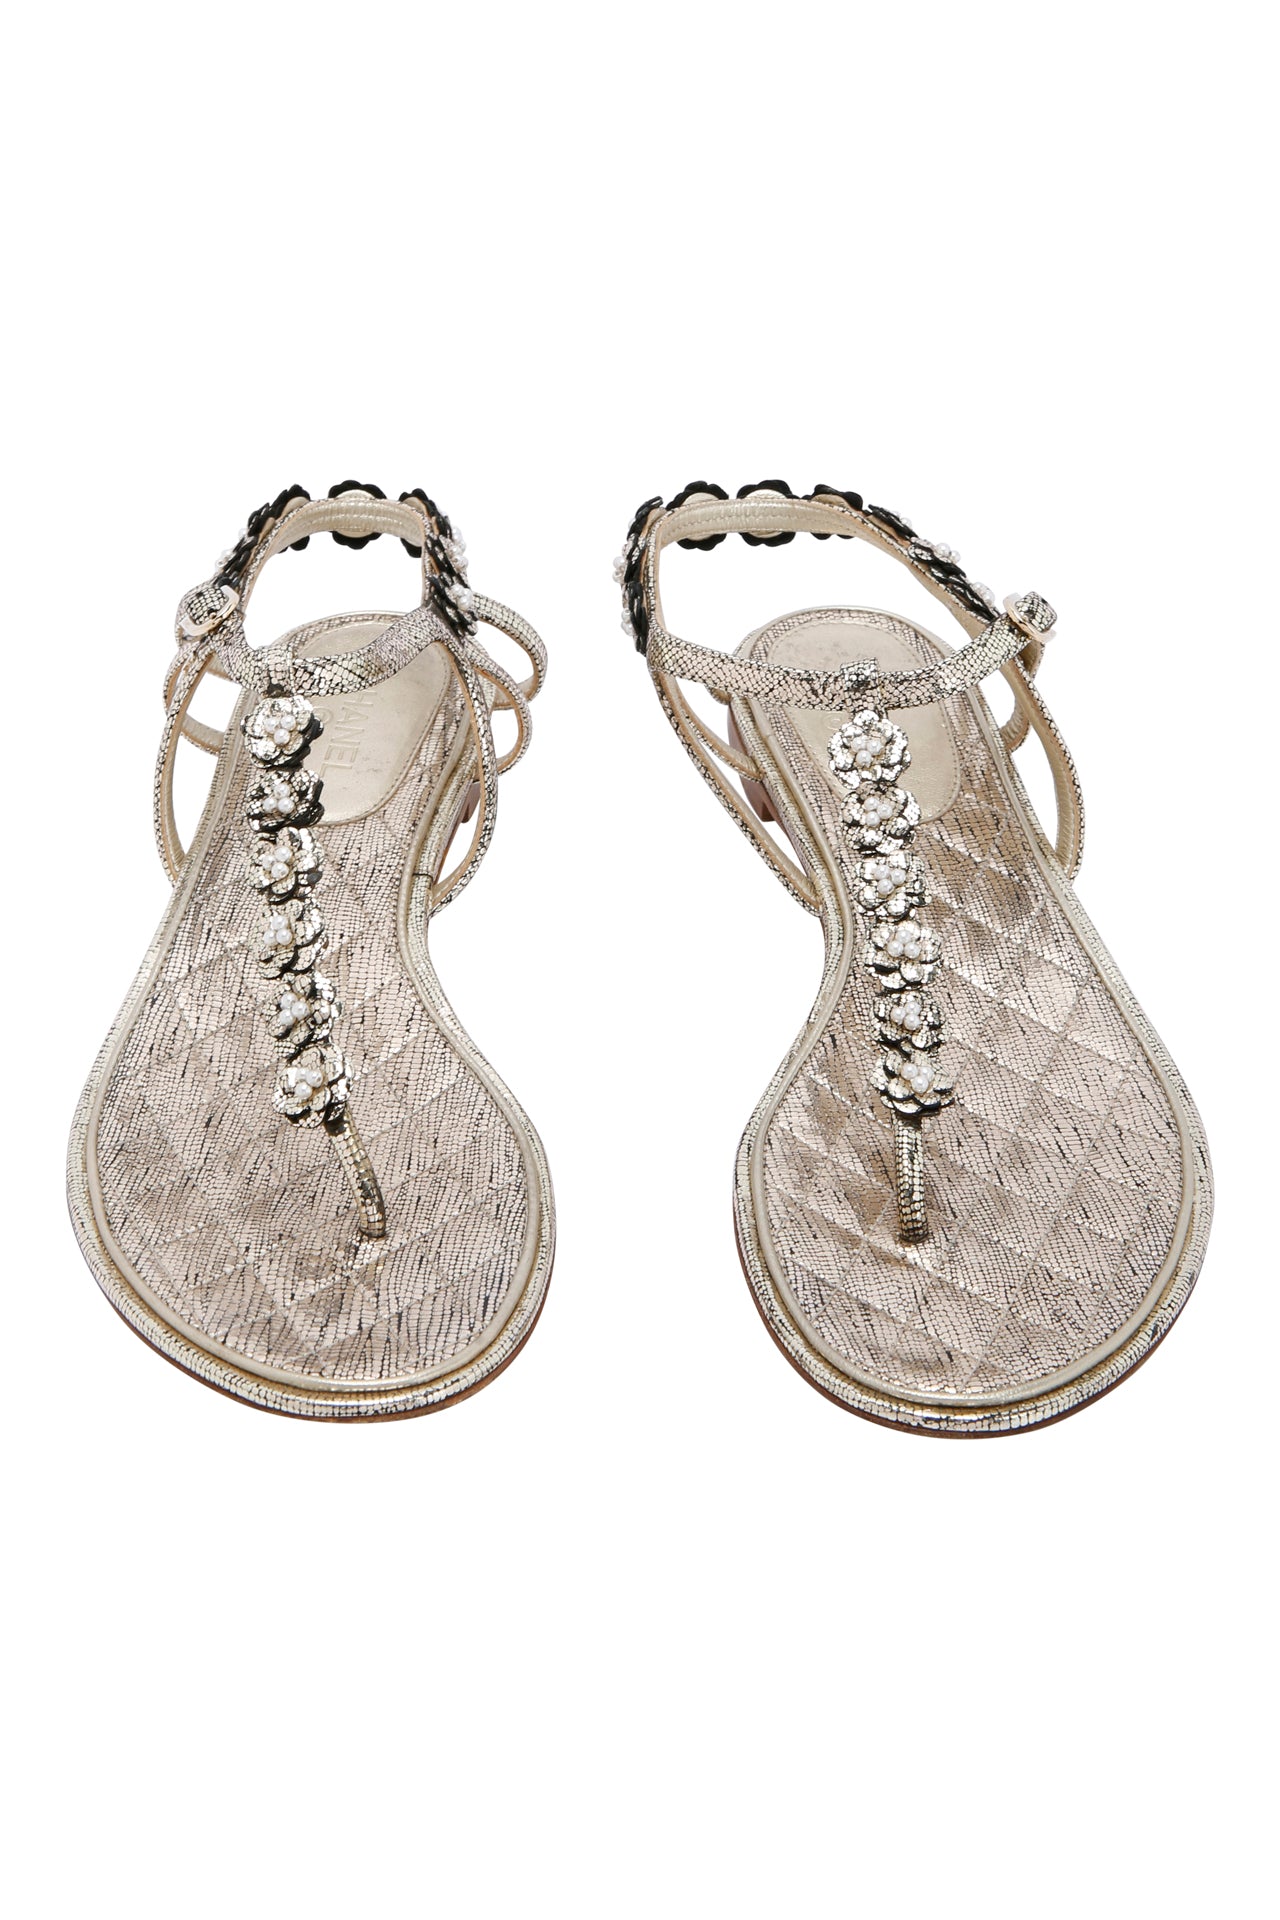 Chanel Metallic Gold Leather Embellished Flat Sandals Size EU 38.5C